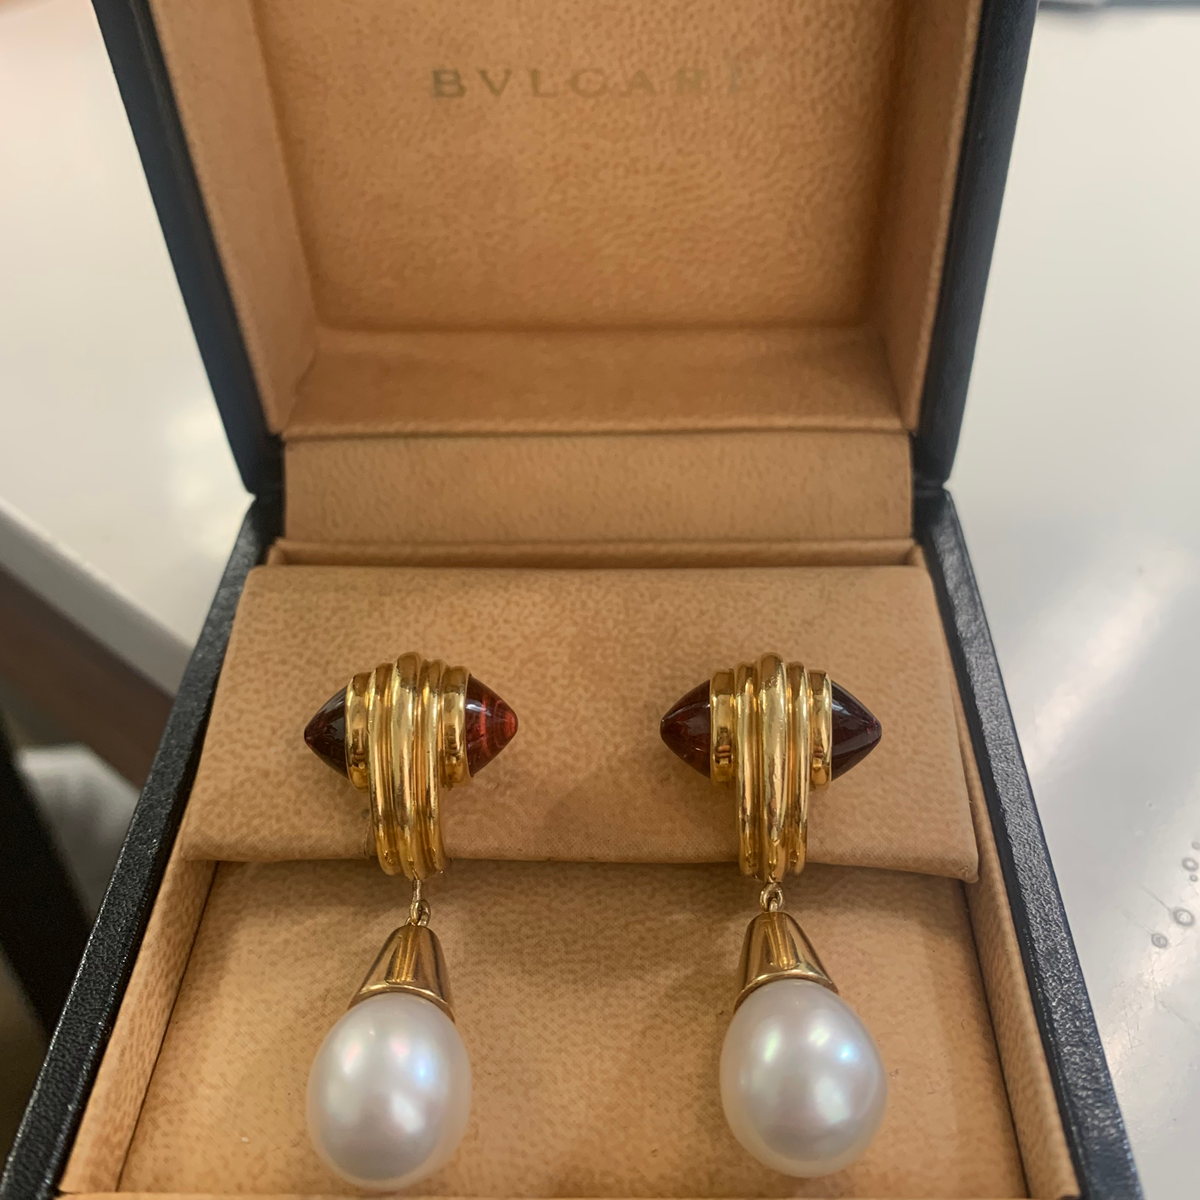 Bulgari 1980s 18KT Yellow Gold Pink Tourmaline & Cultured South Sea Pearl Earrings in original box